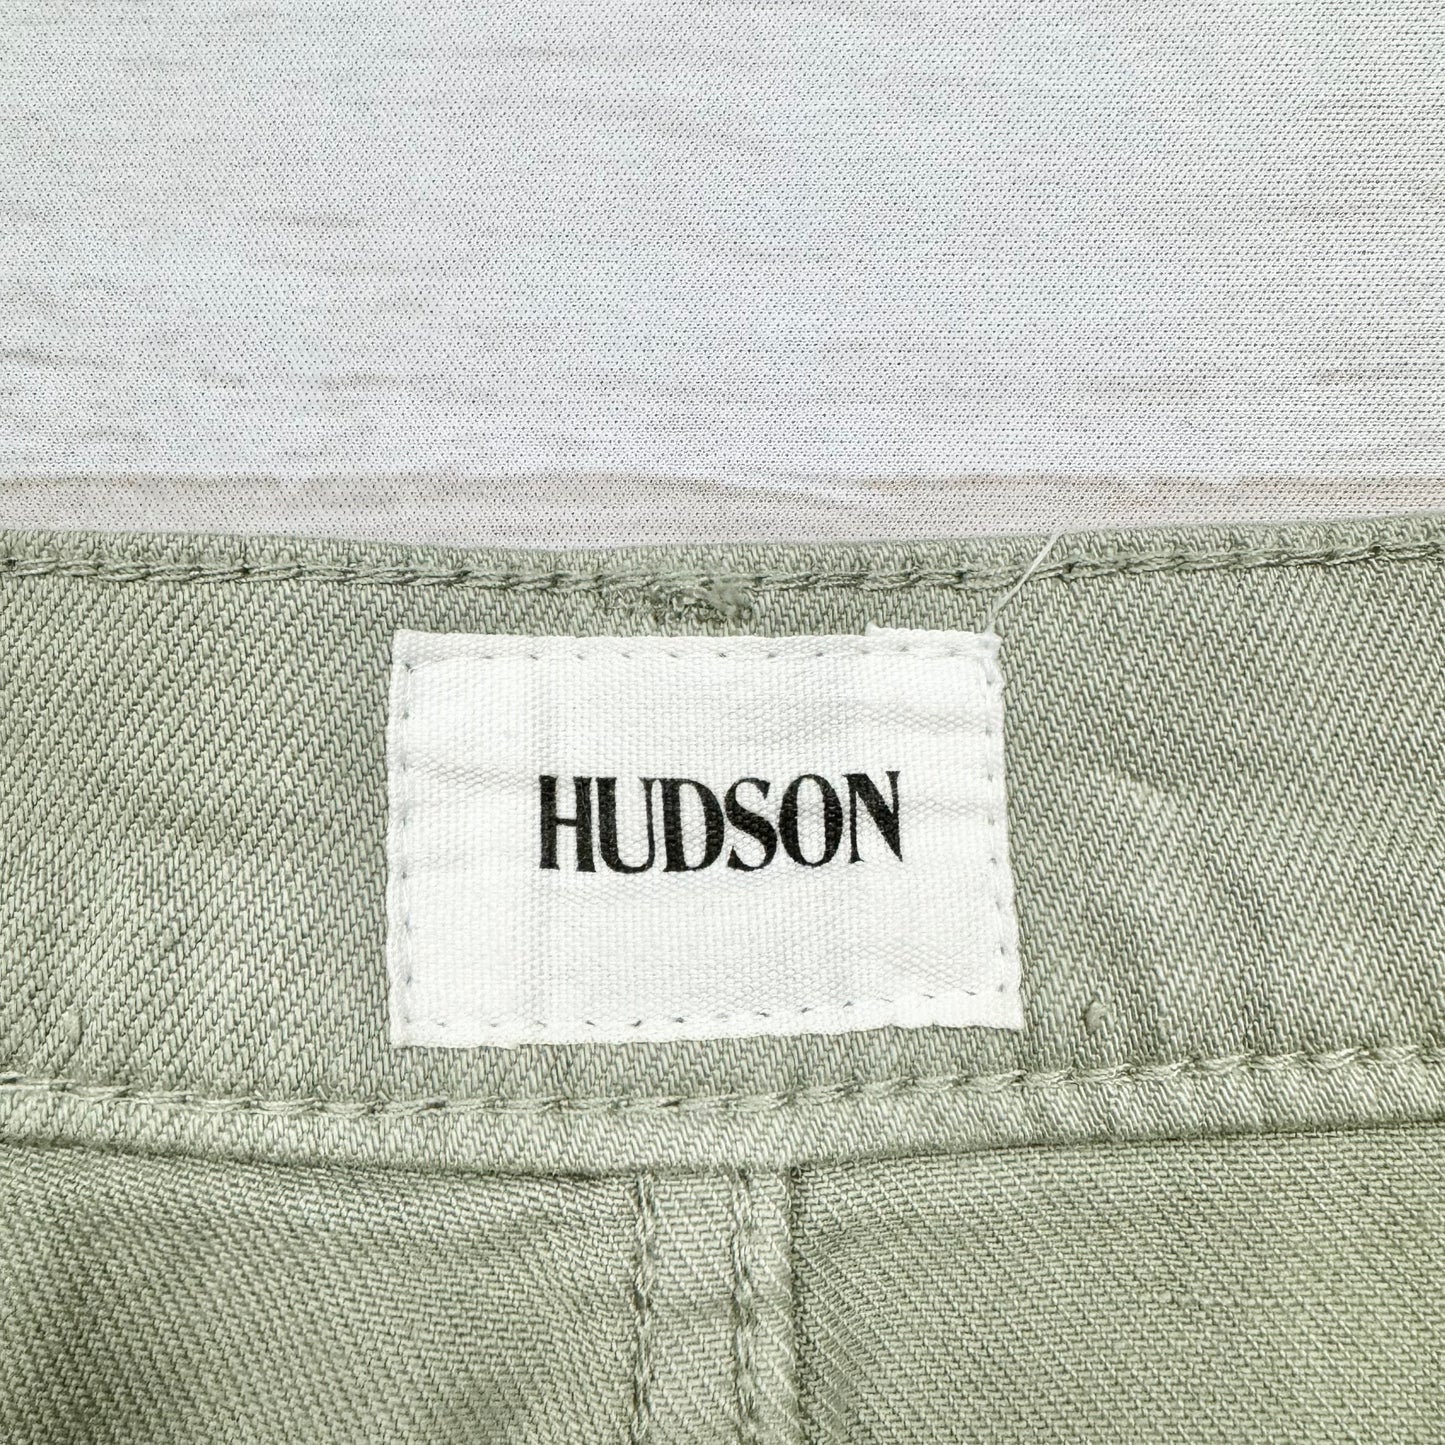 Shorts Designer By Hudson  Size: 8